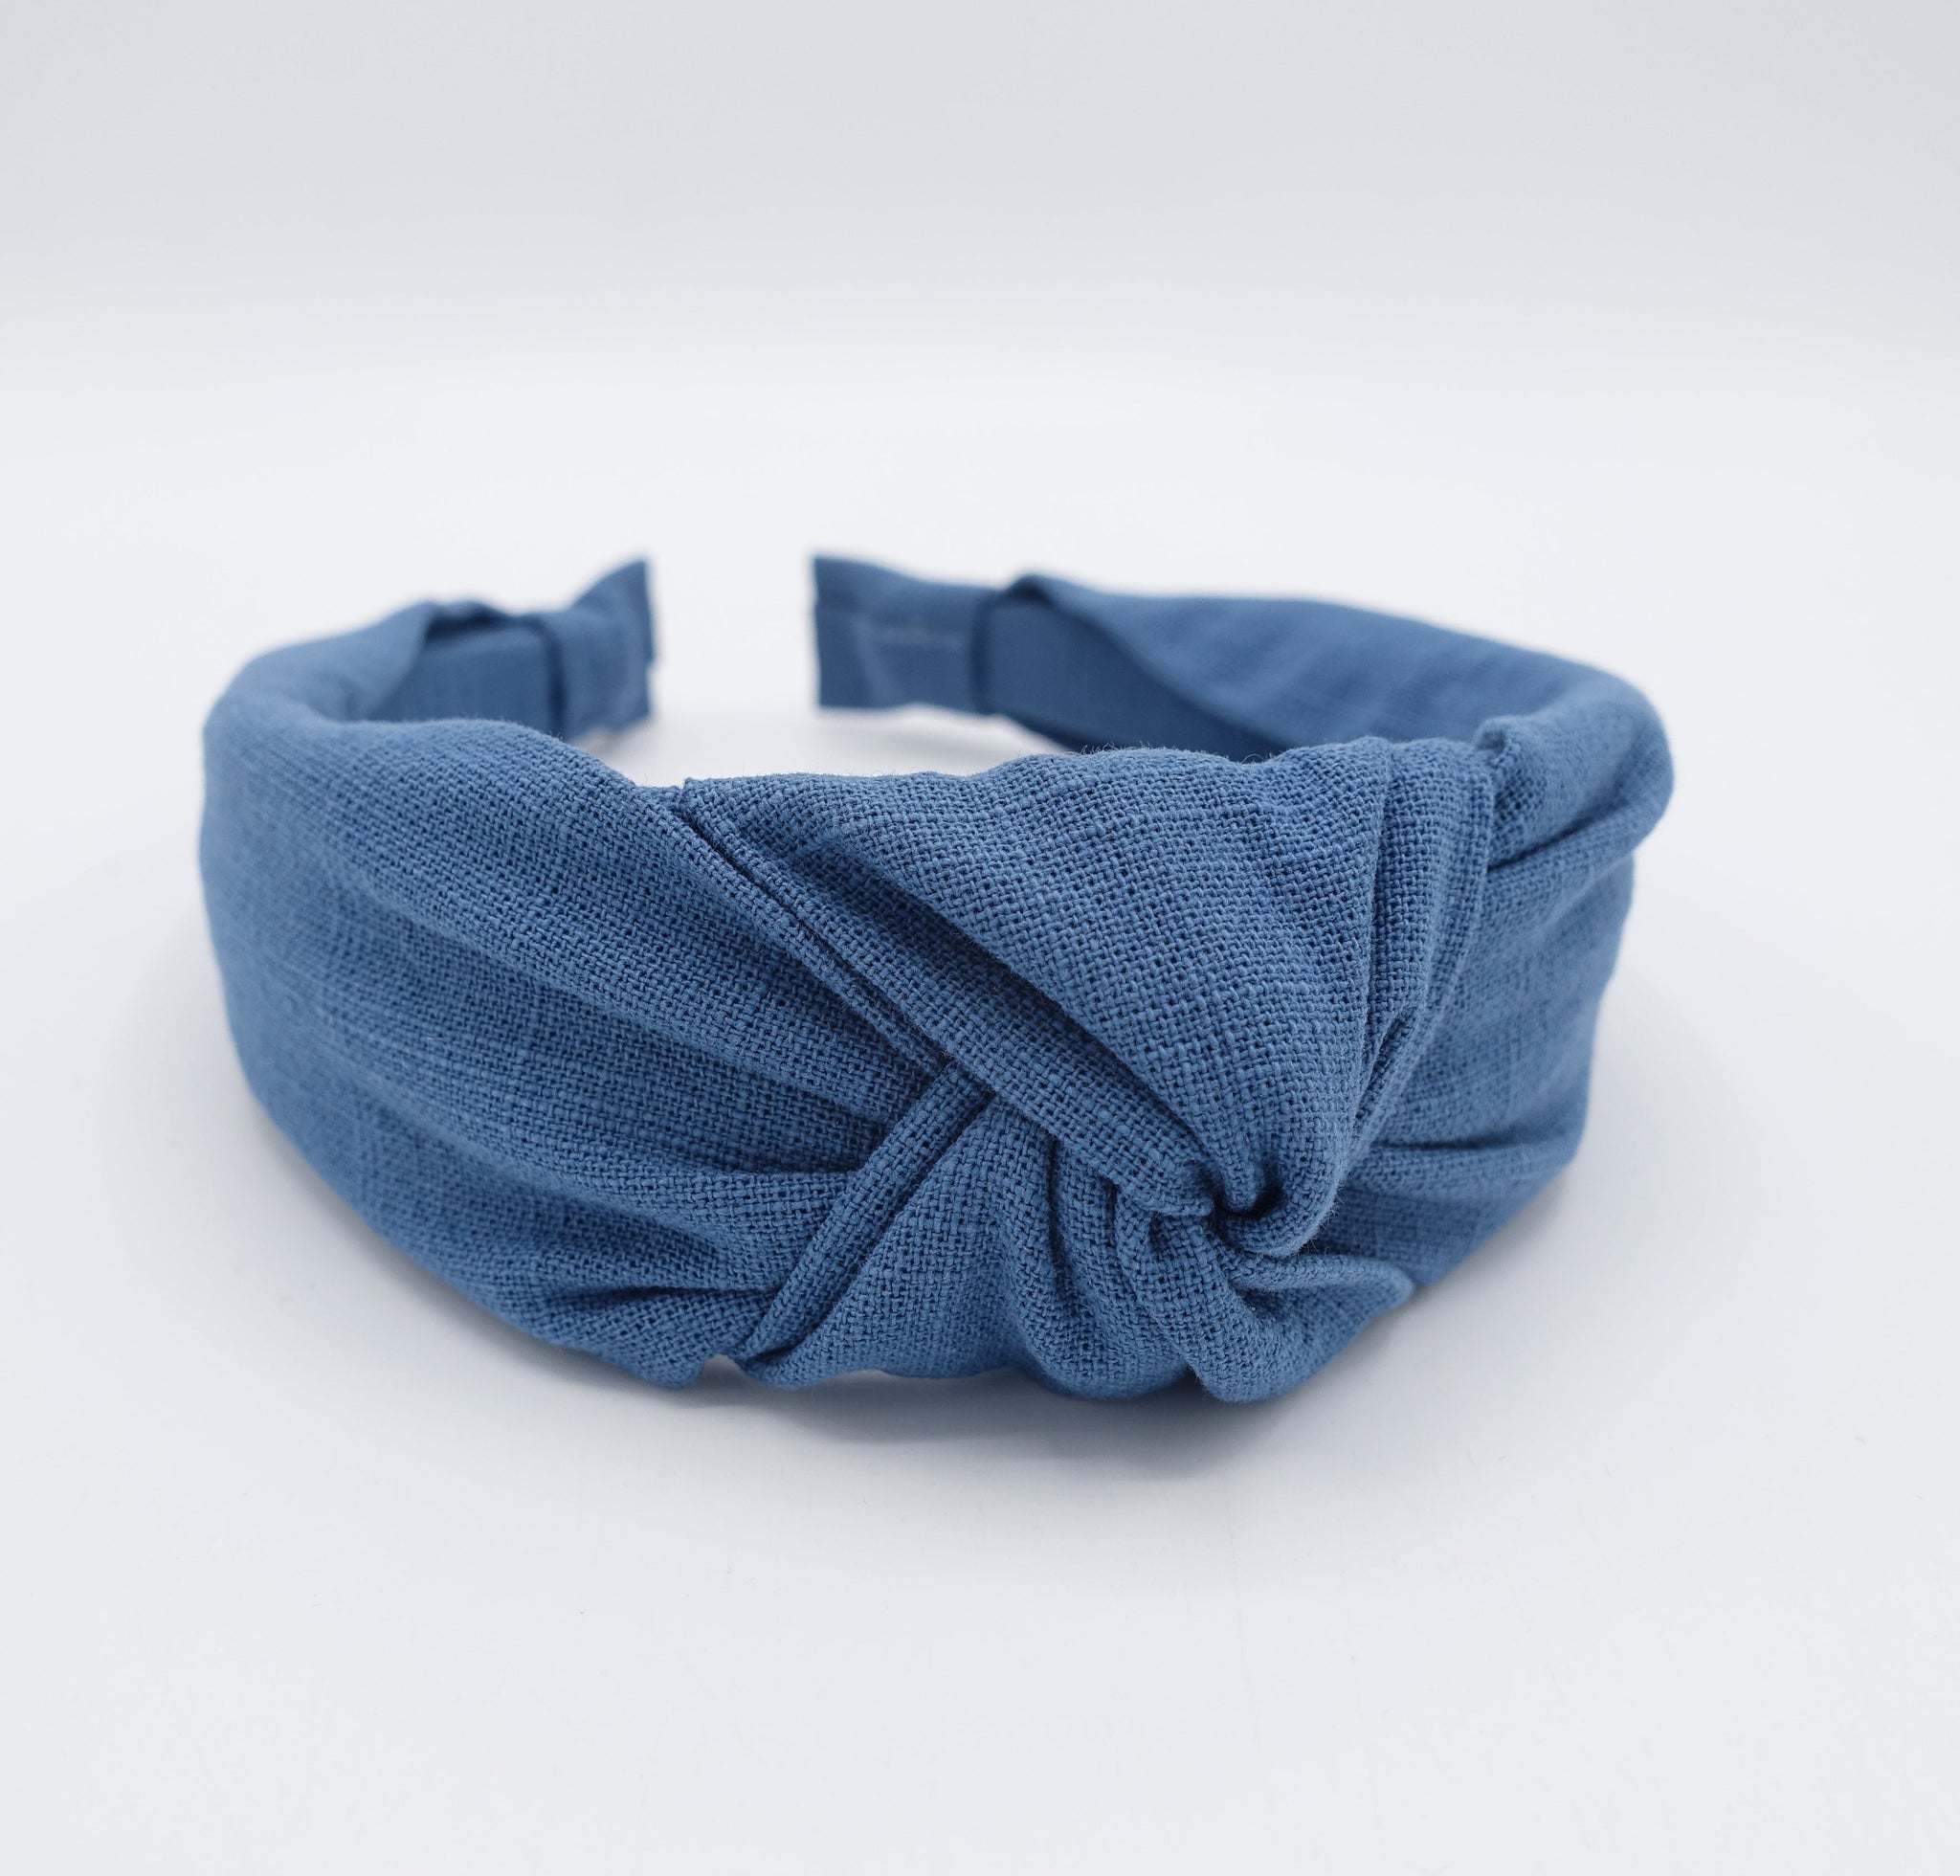 veryshine.com Headband Denim blue linen blend fabric top knot headband basic style hairband women hair accessory